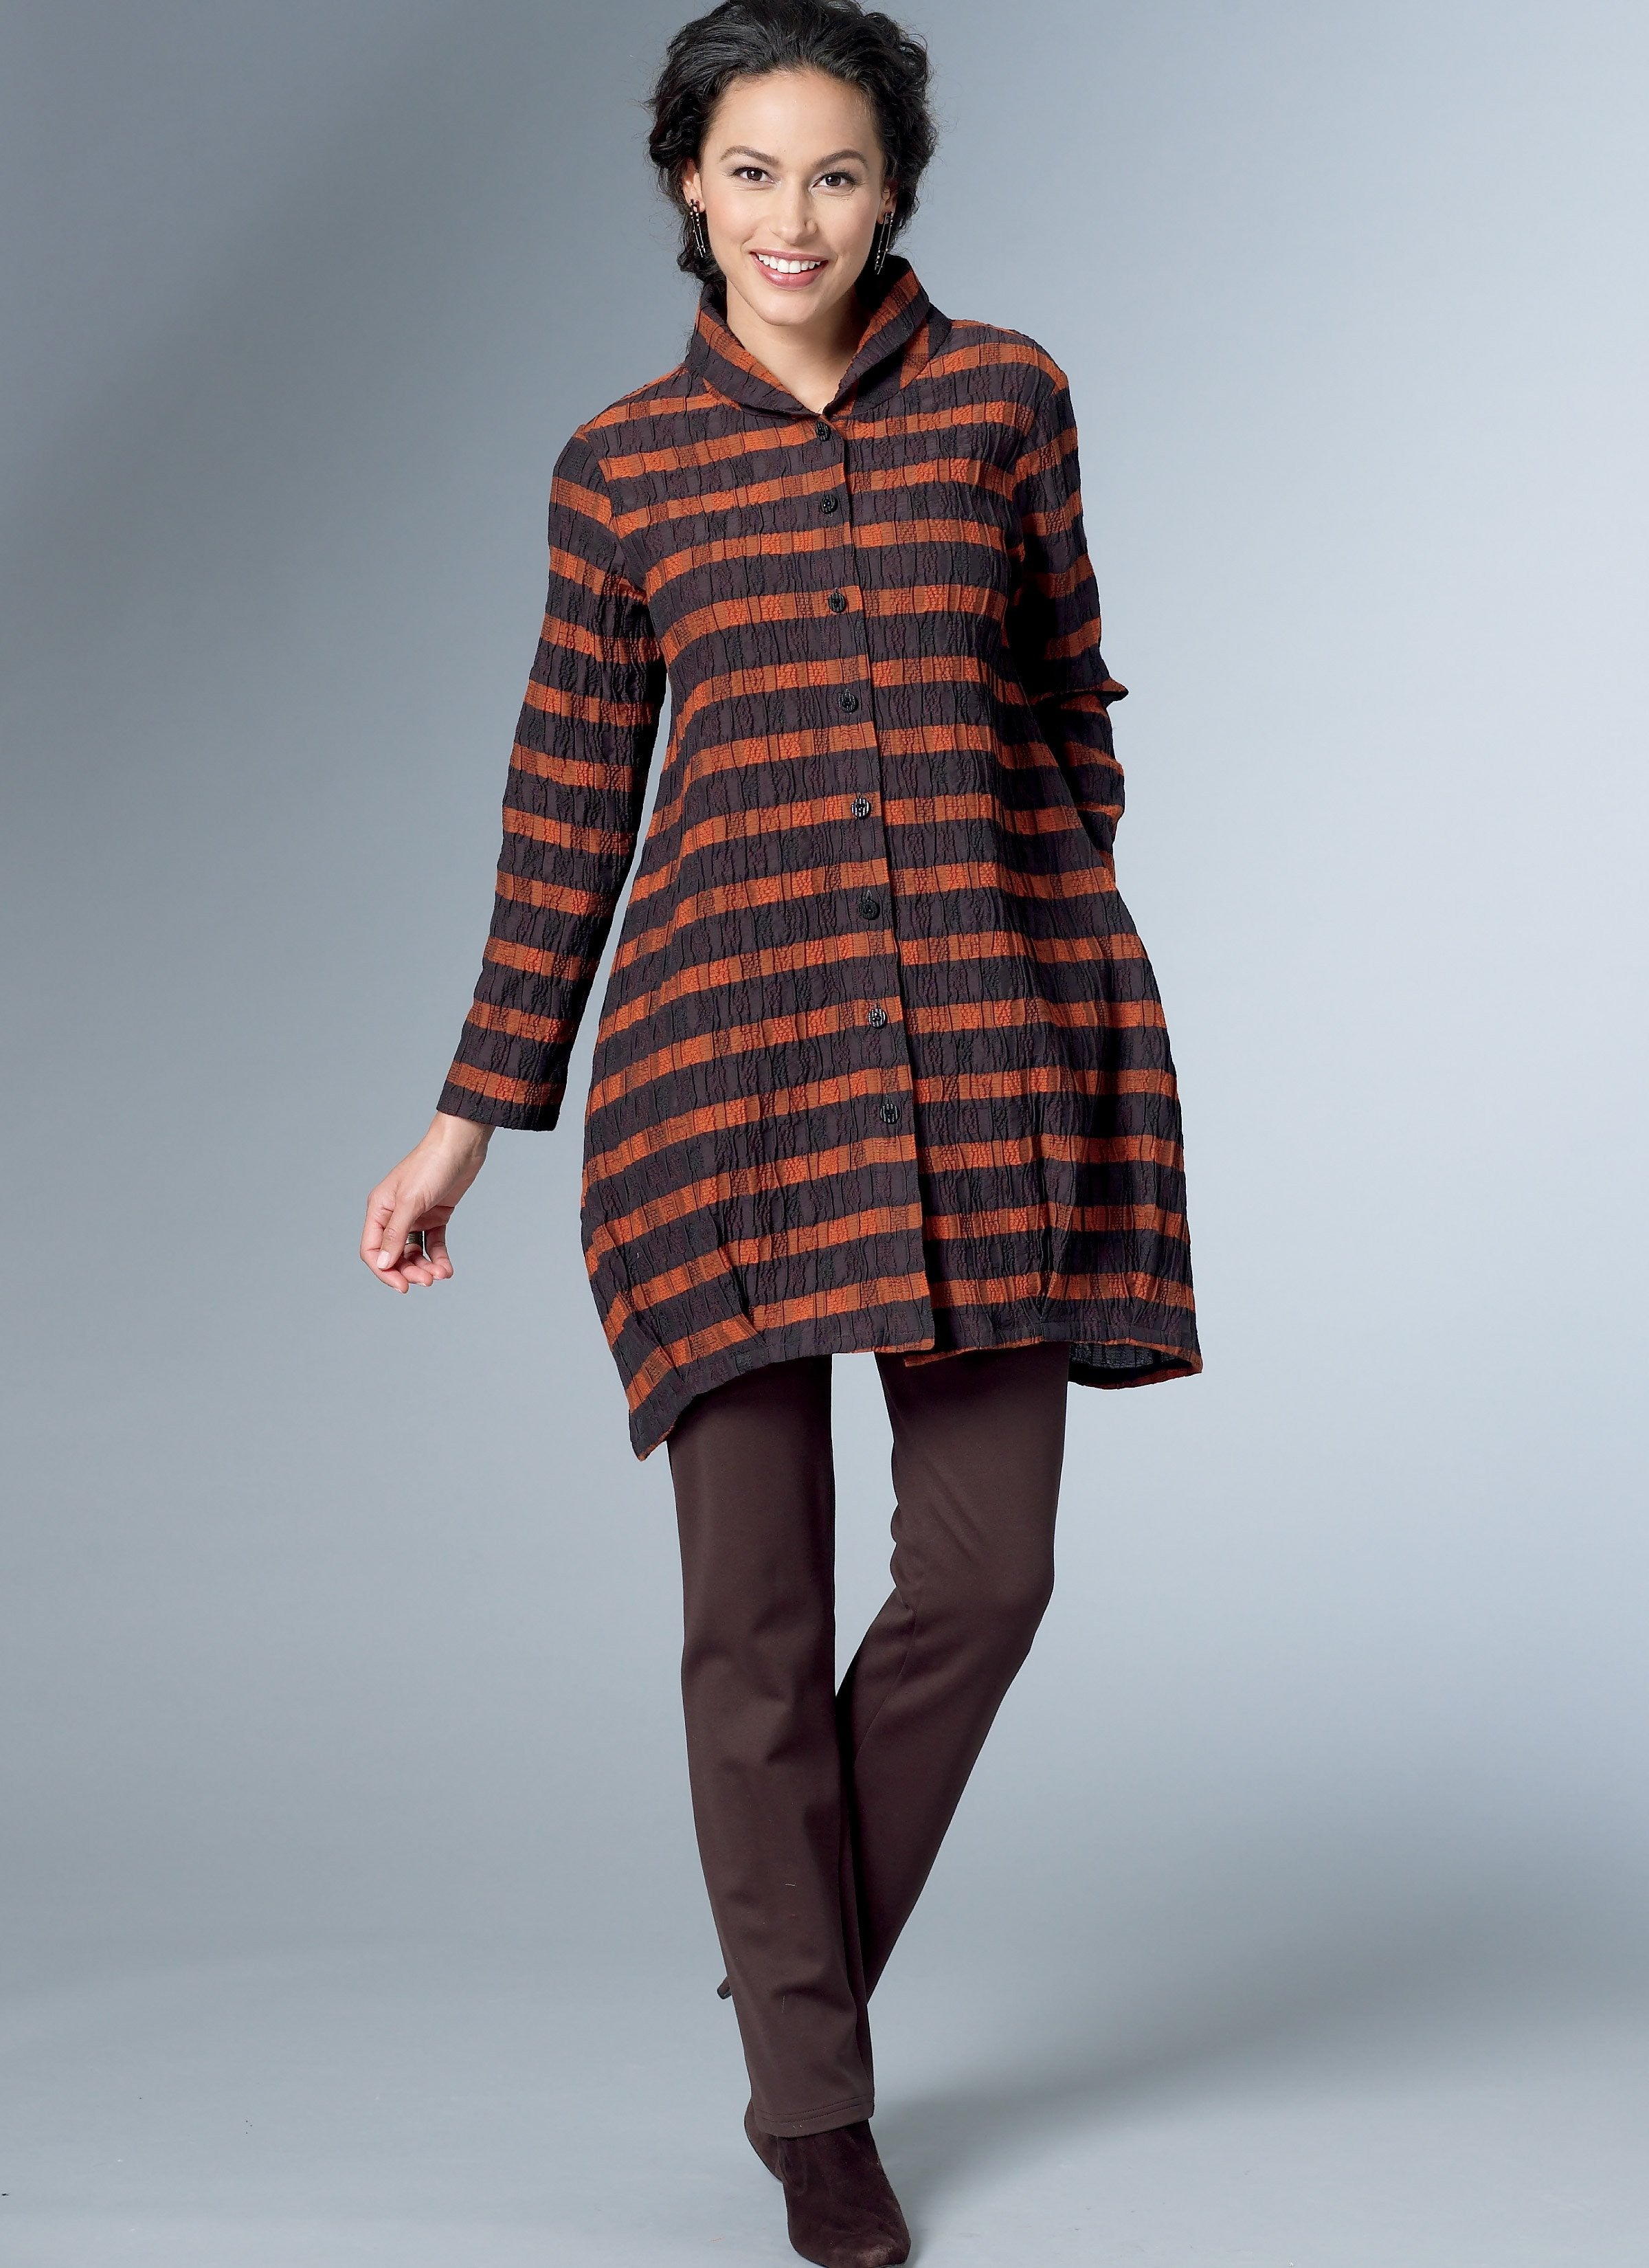 Butterick 6491 Misses' Loose Shirts pattern — jaycotts.co.uk - Sewing ...